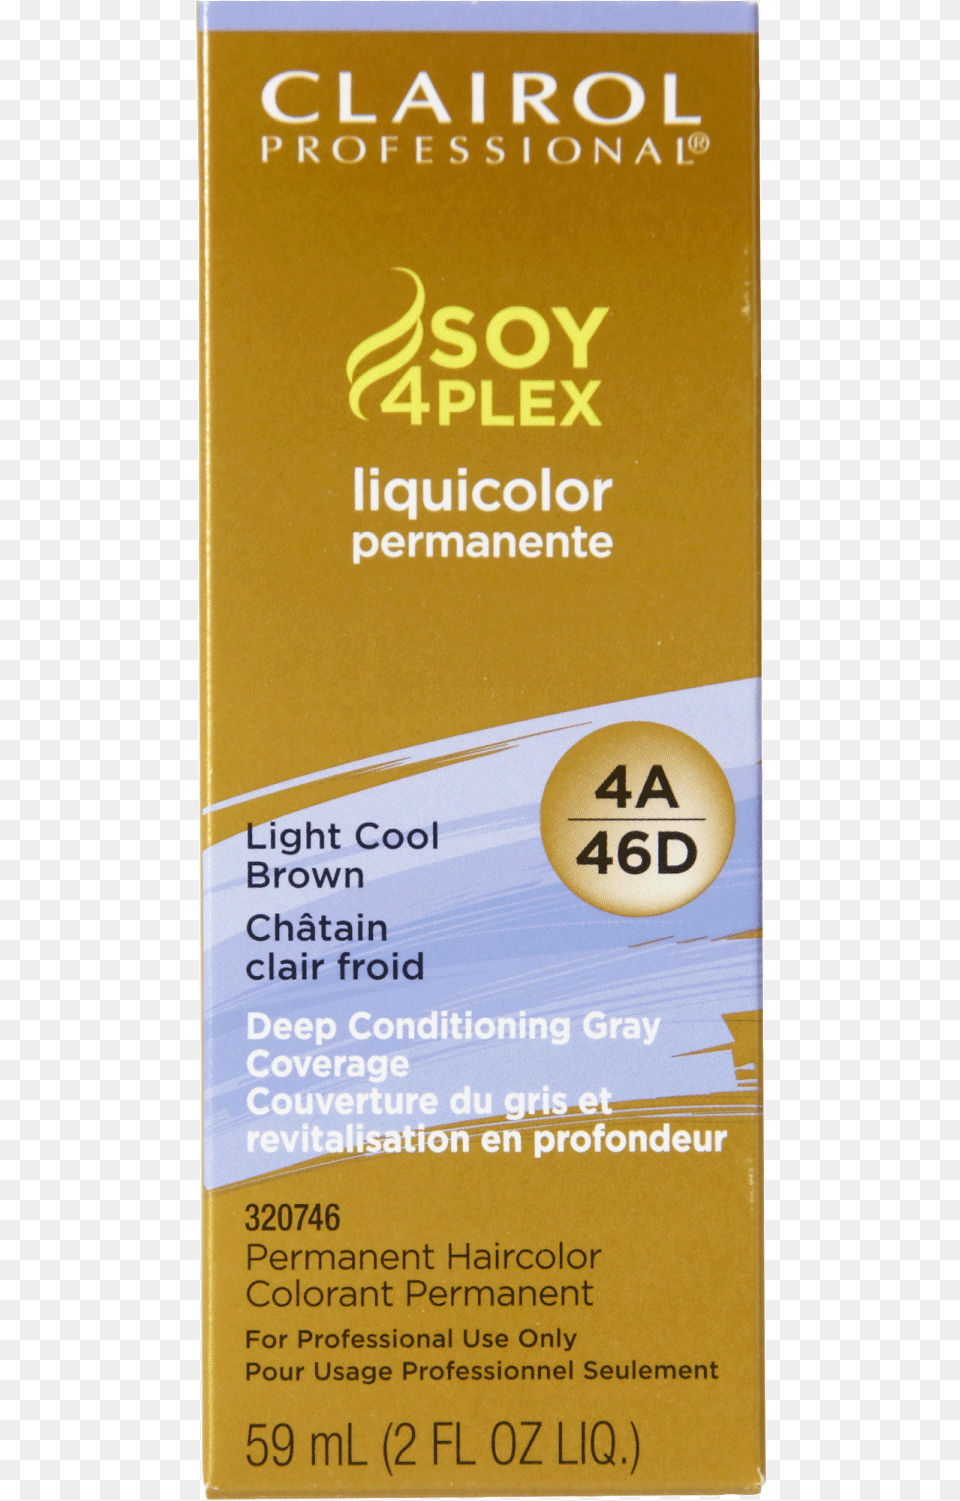 Clairol Professional 4a46d Light Cool Brown Liquicolor Soy 4 Plex, Advertisement, Book, Poster, Publication Free Png